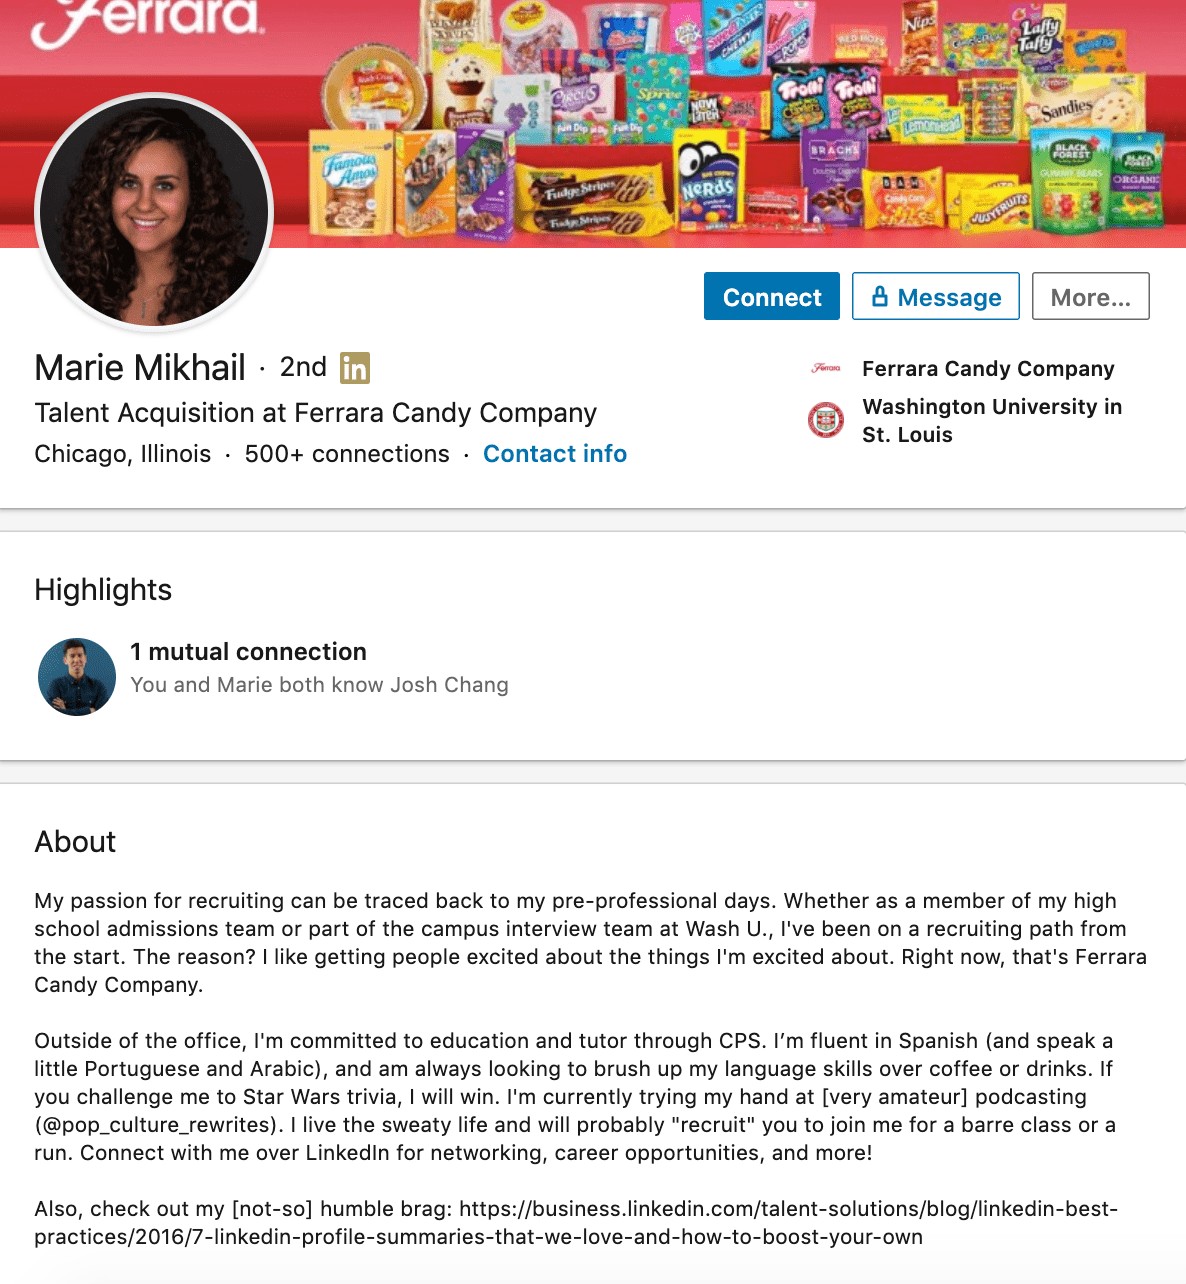 Marie Mikhail's professional bio on LinkedIn